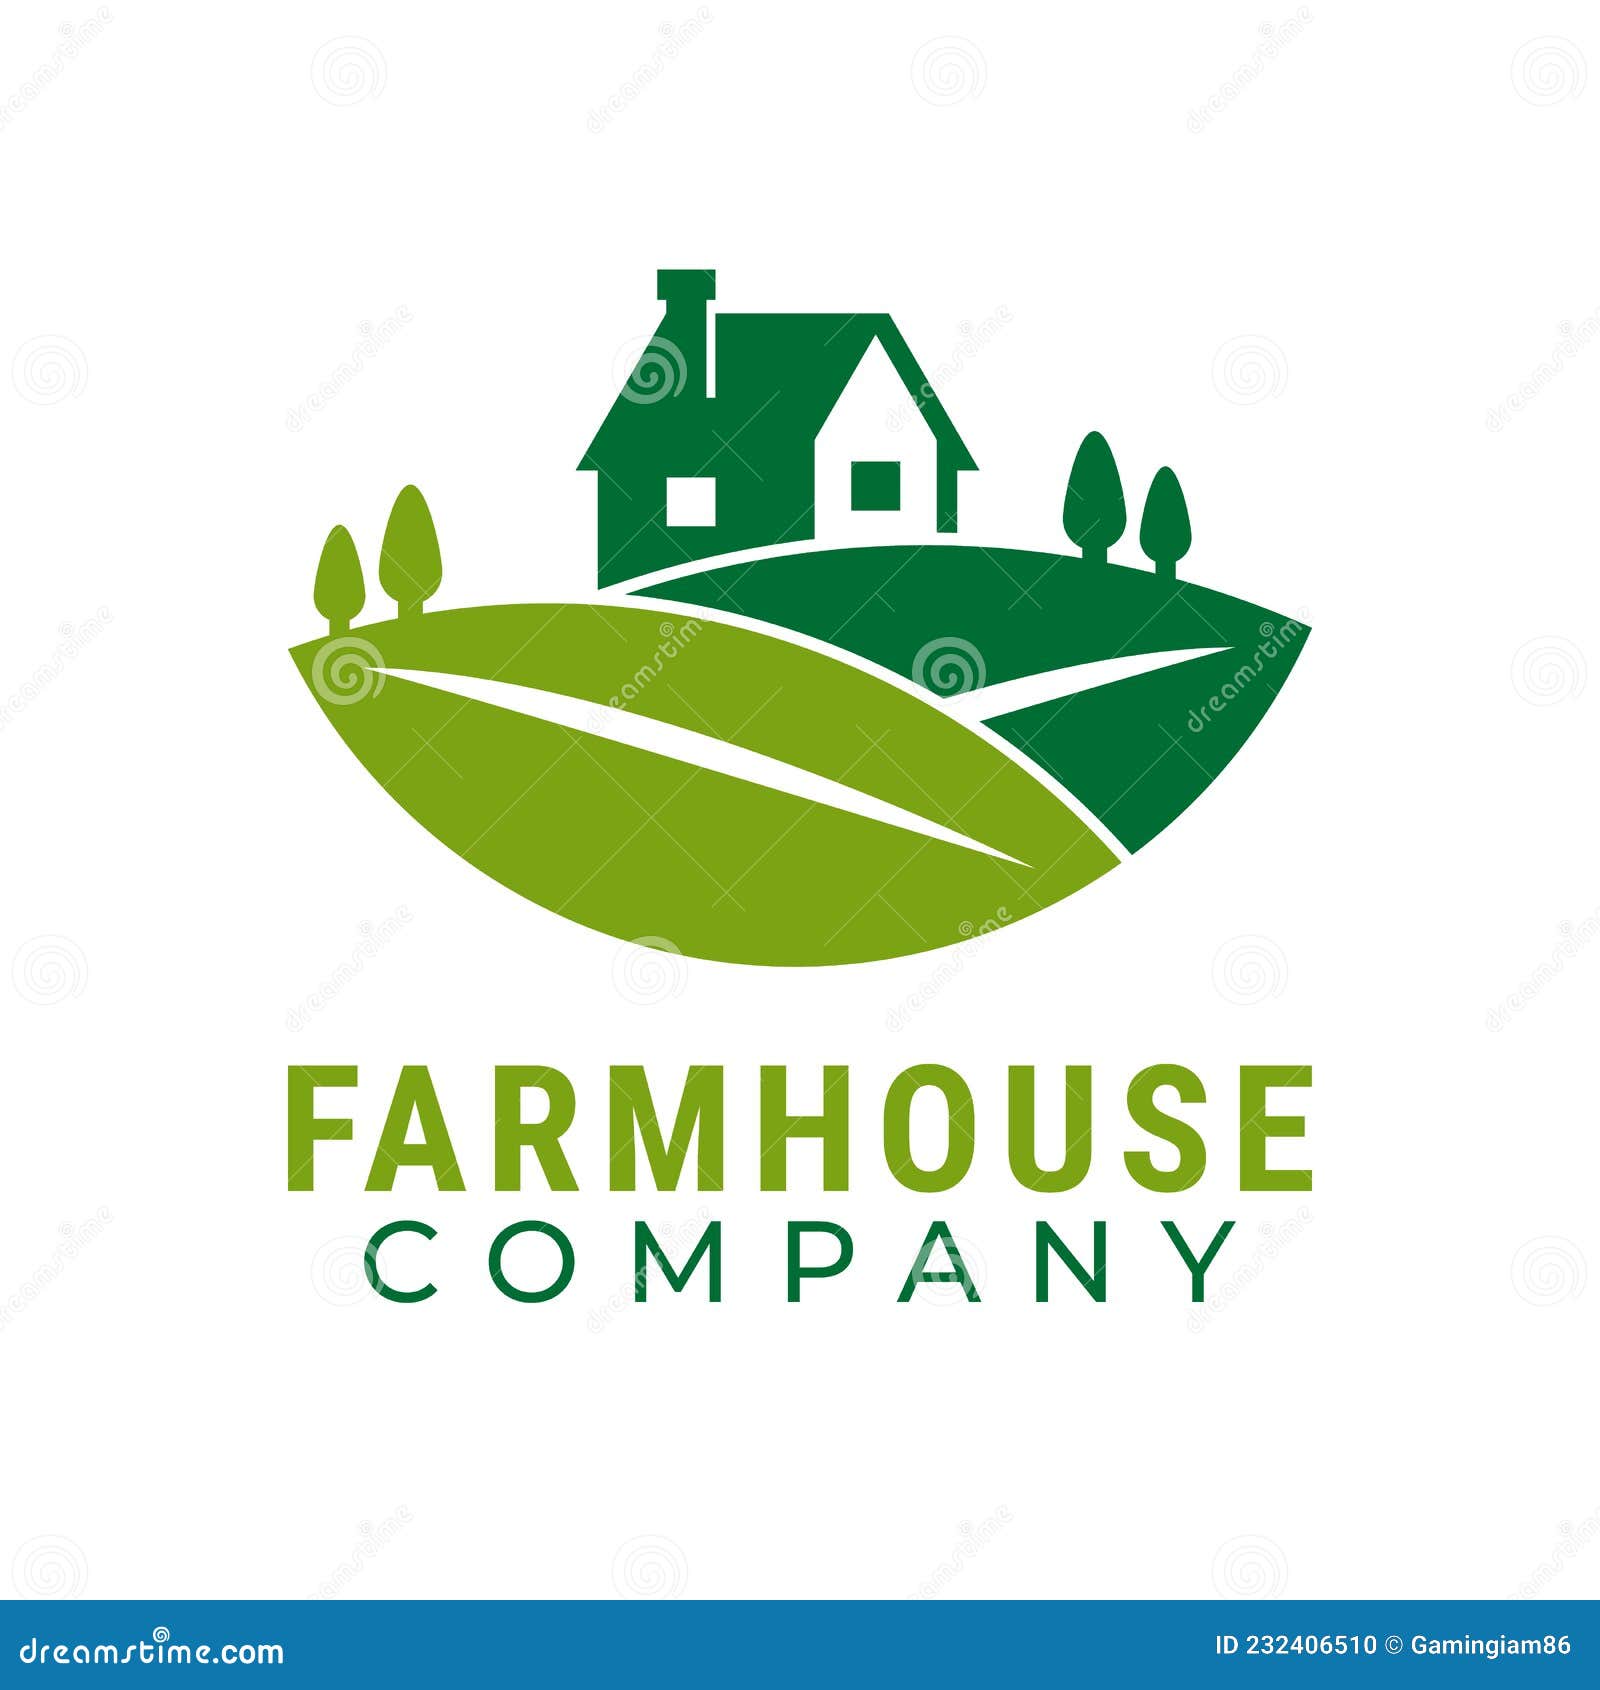 farmhouse logo ideas 4